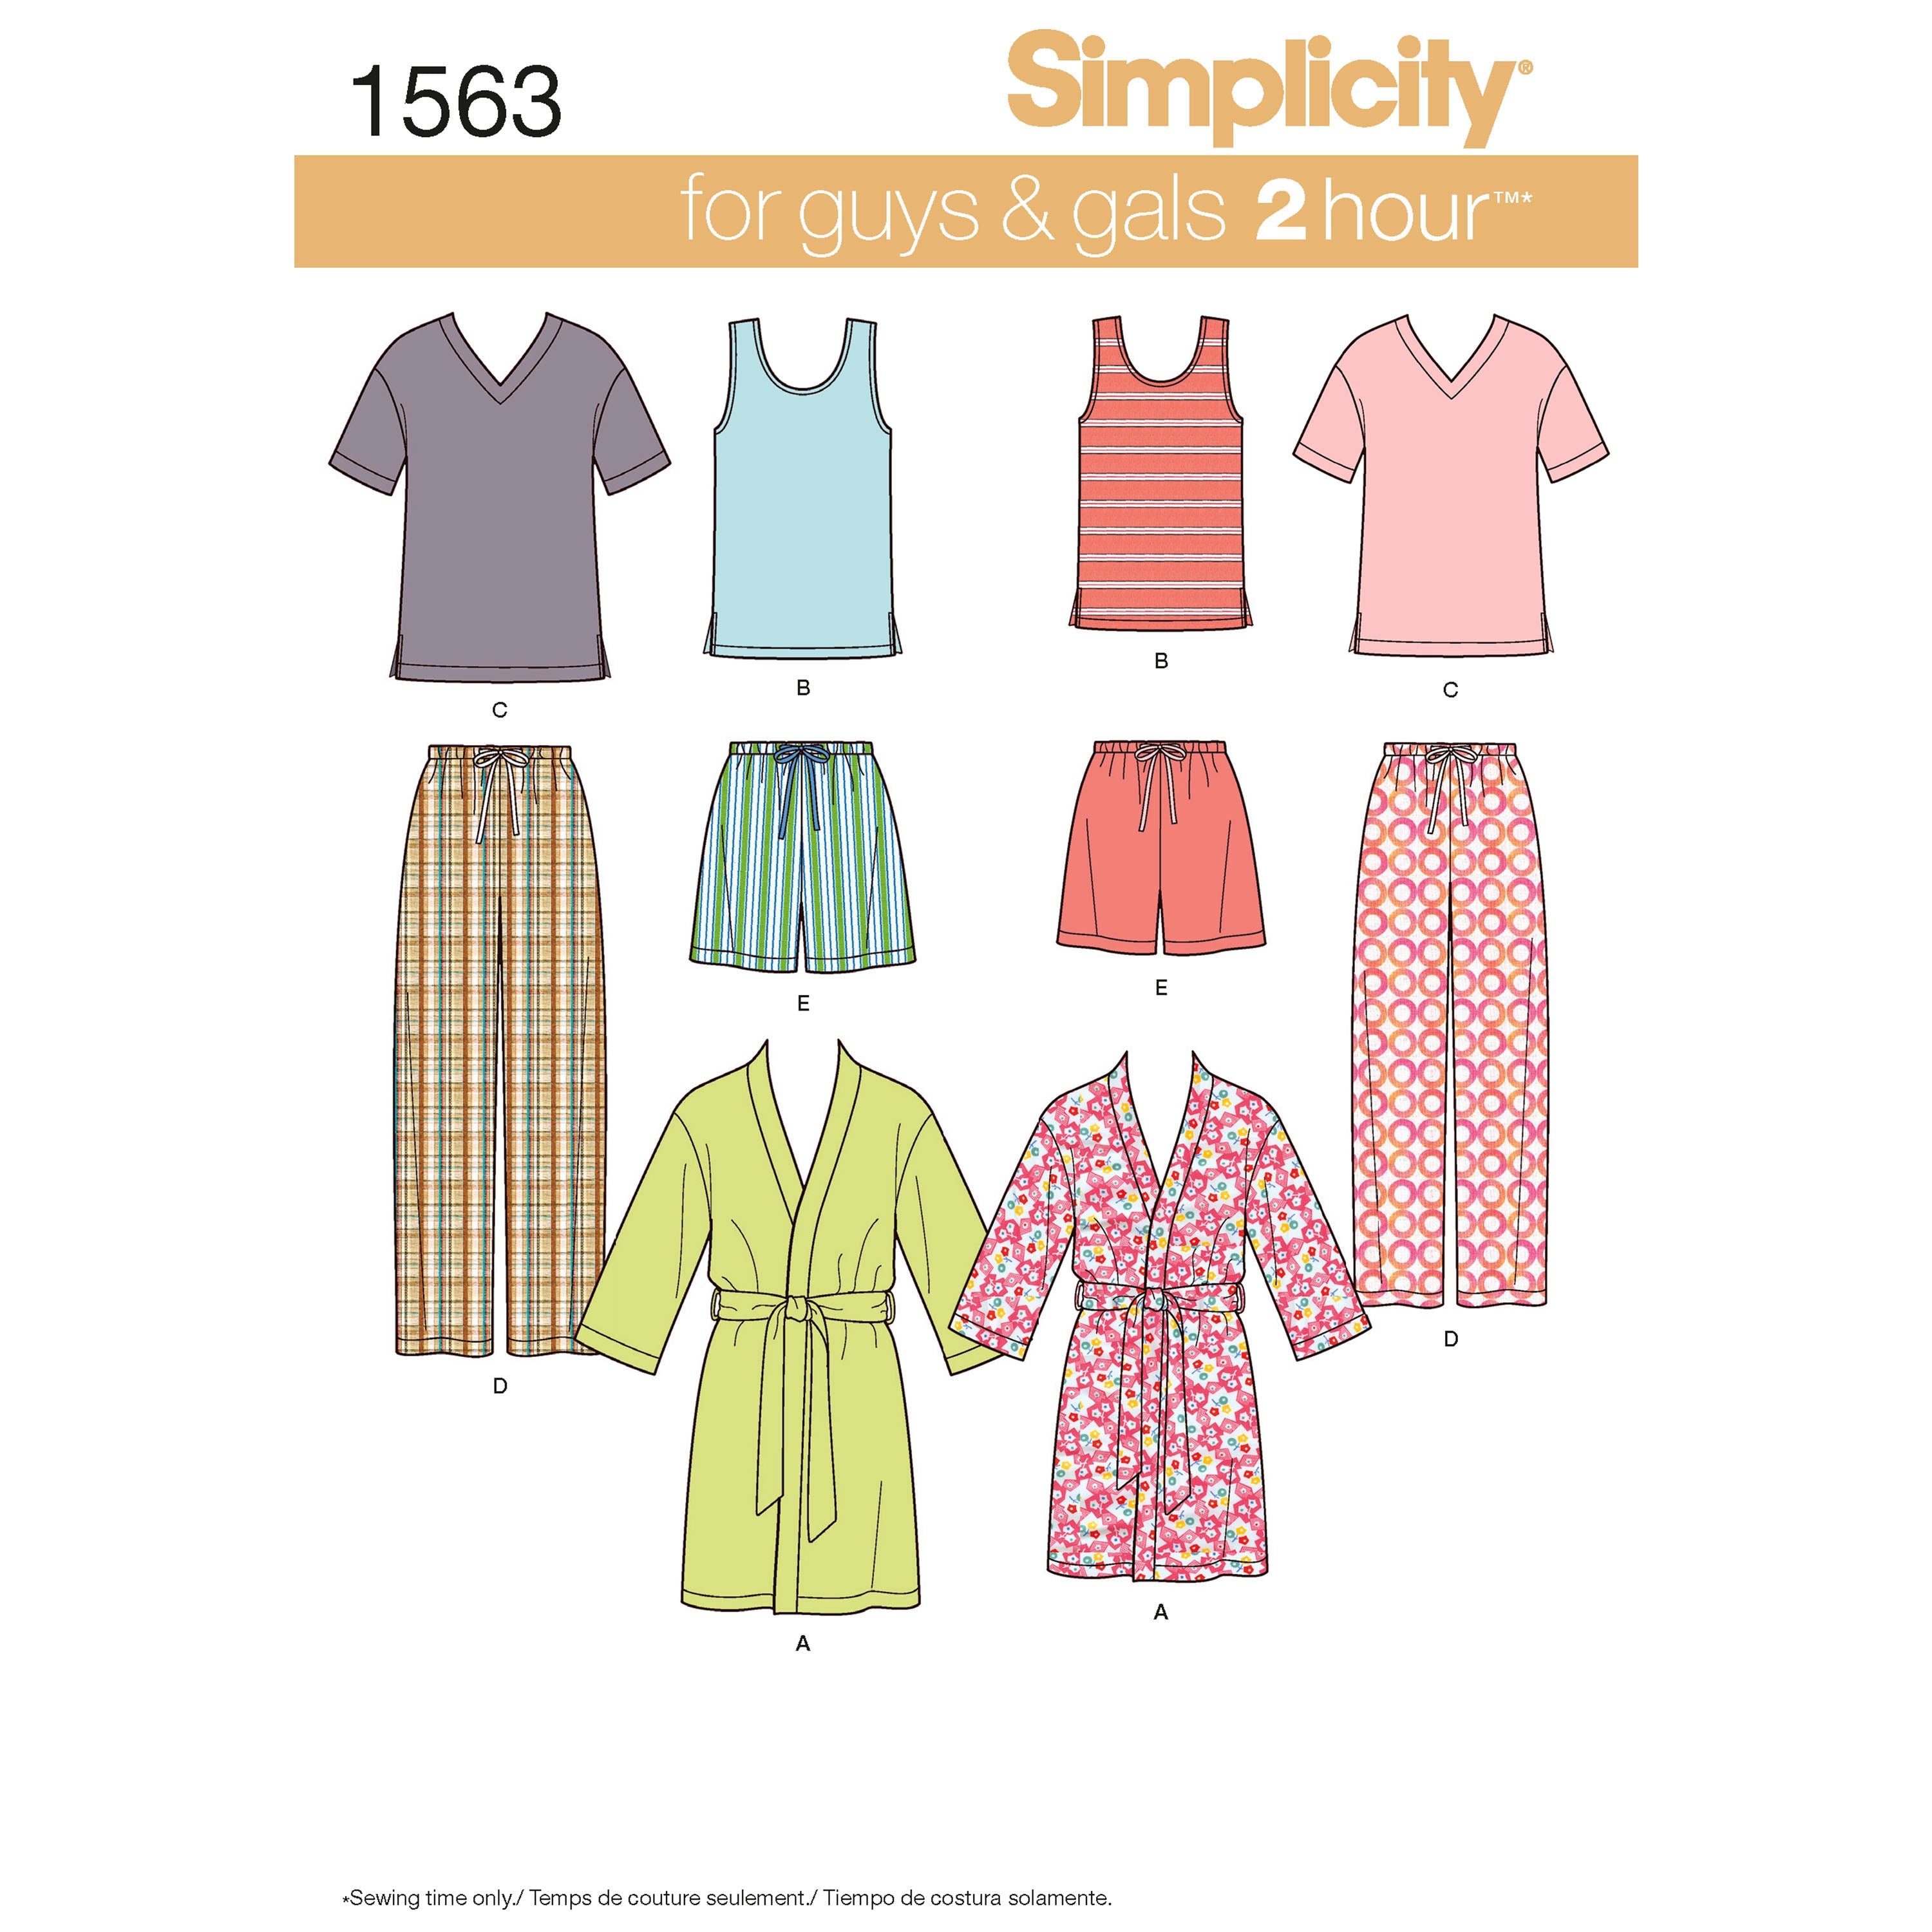 Simplicity Pattern 1563 Misses', men's teens' sleepwear from Jaycotts Sewing Supplies